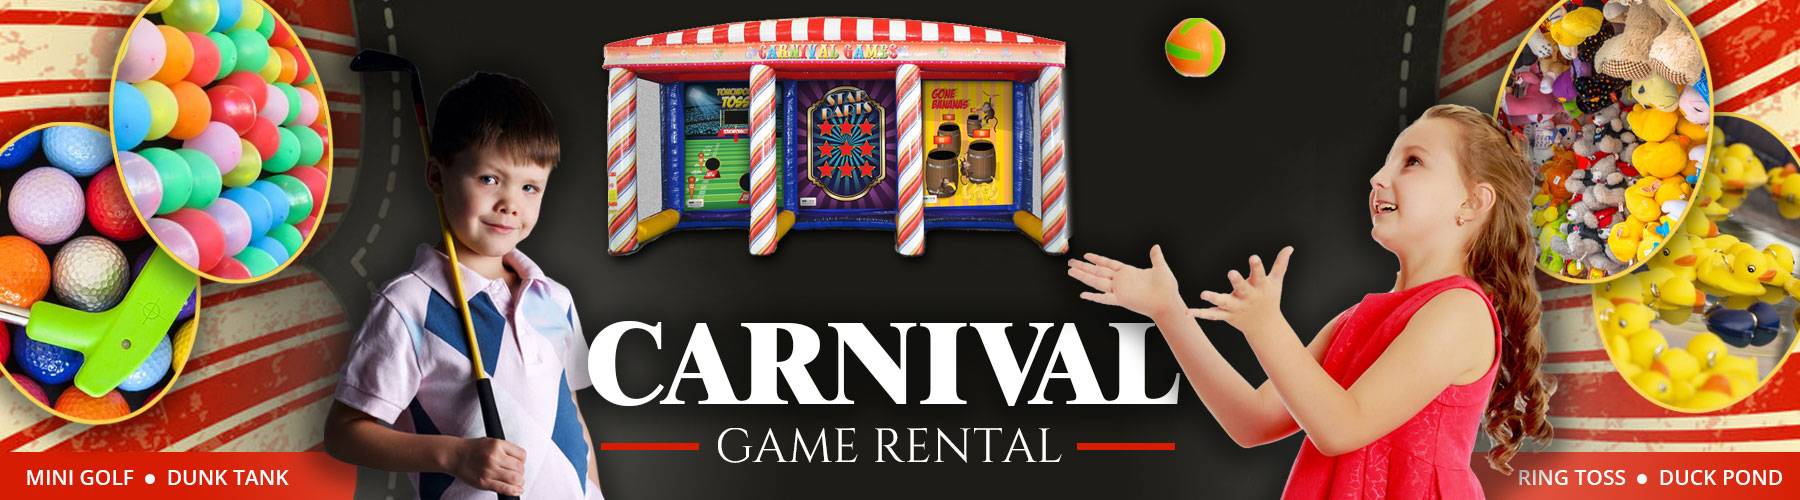 carnival-game-rental-2